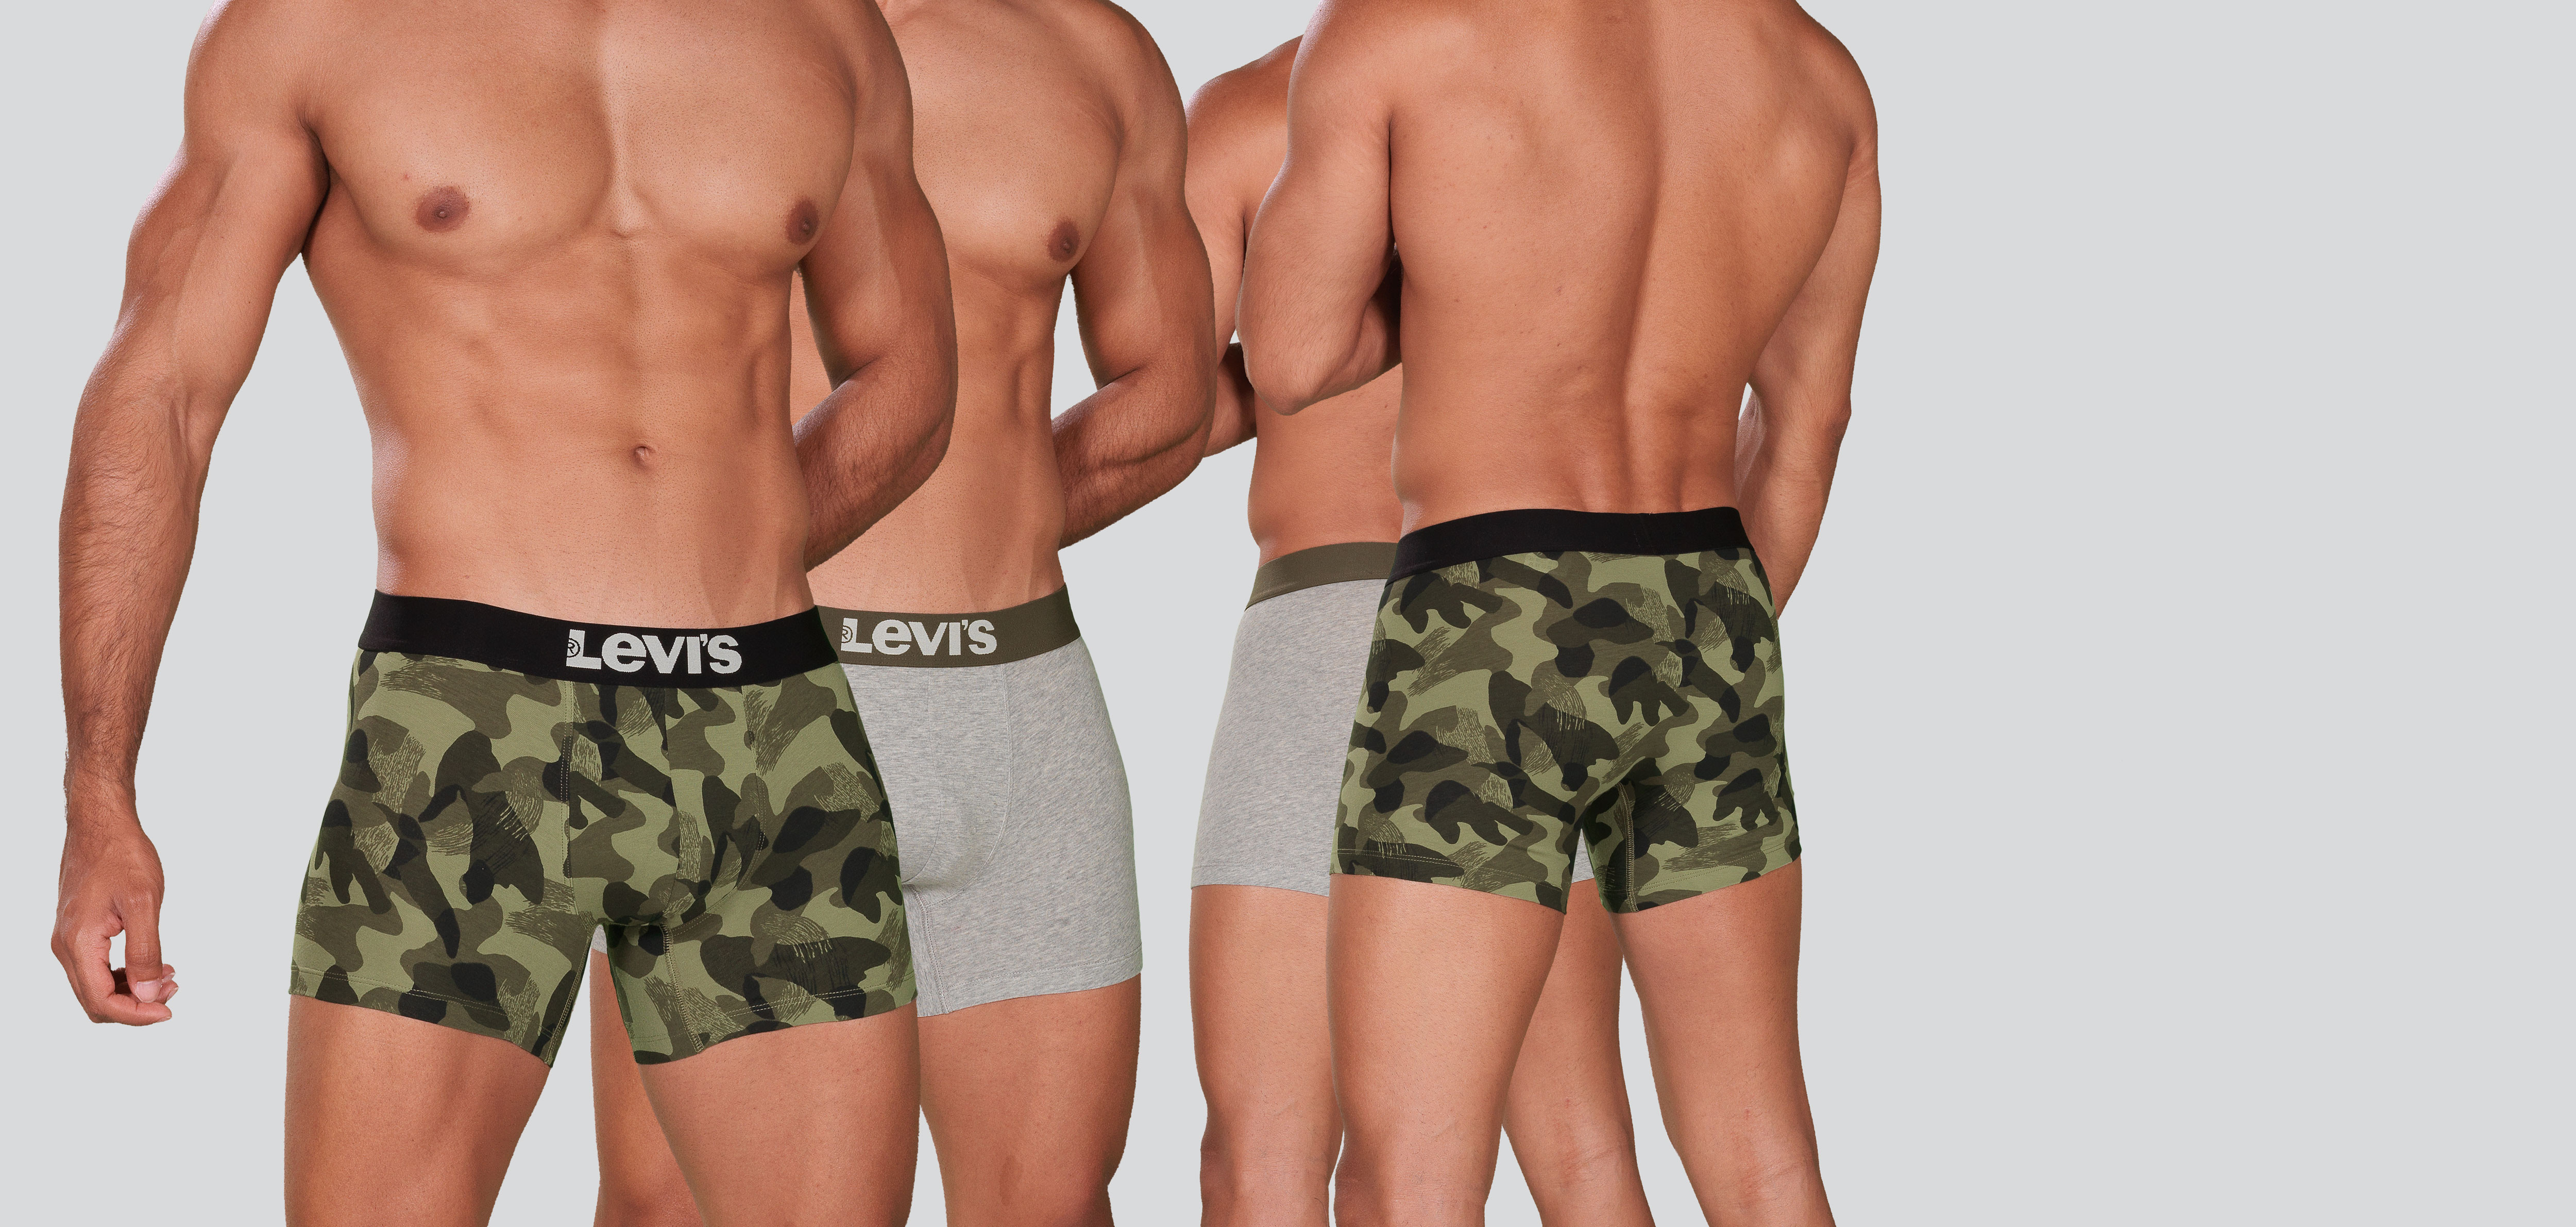 Levi_s Camouflage AOP Boxer Brief 2-Pack 6001,